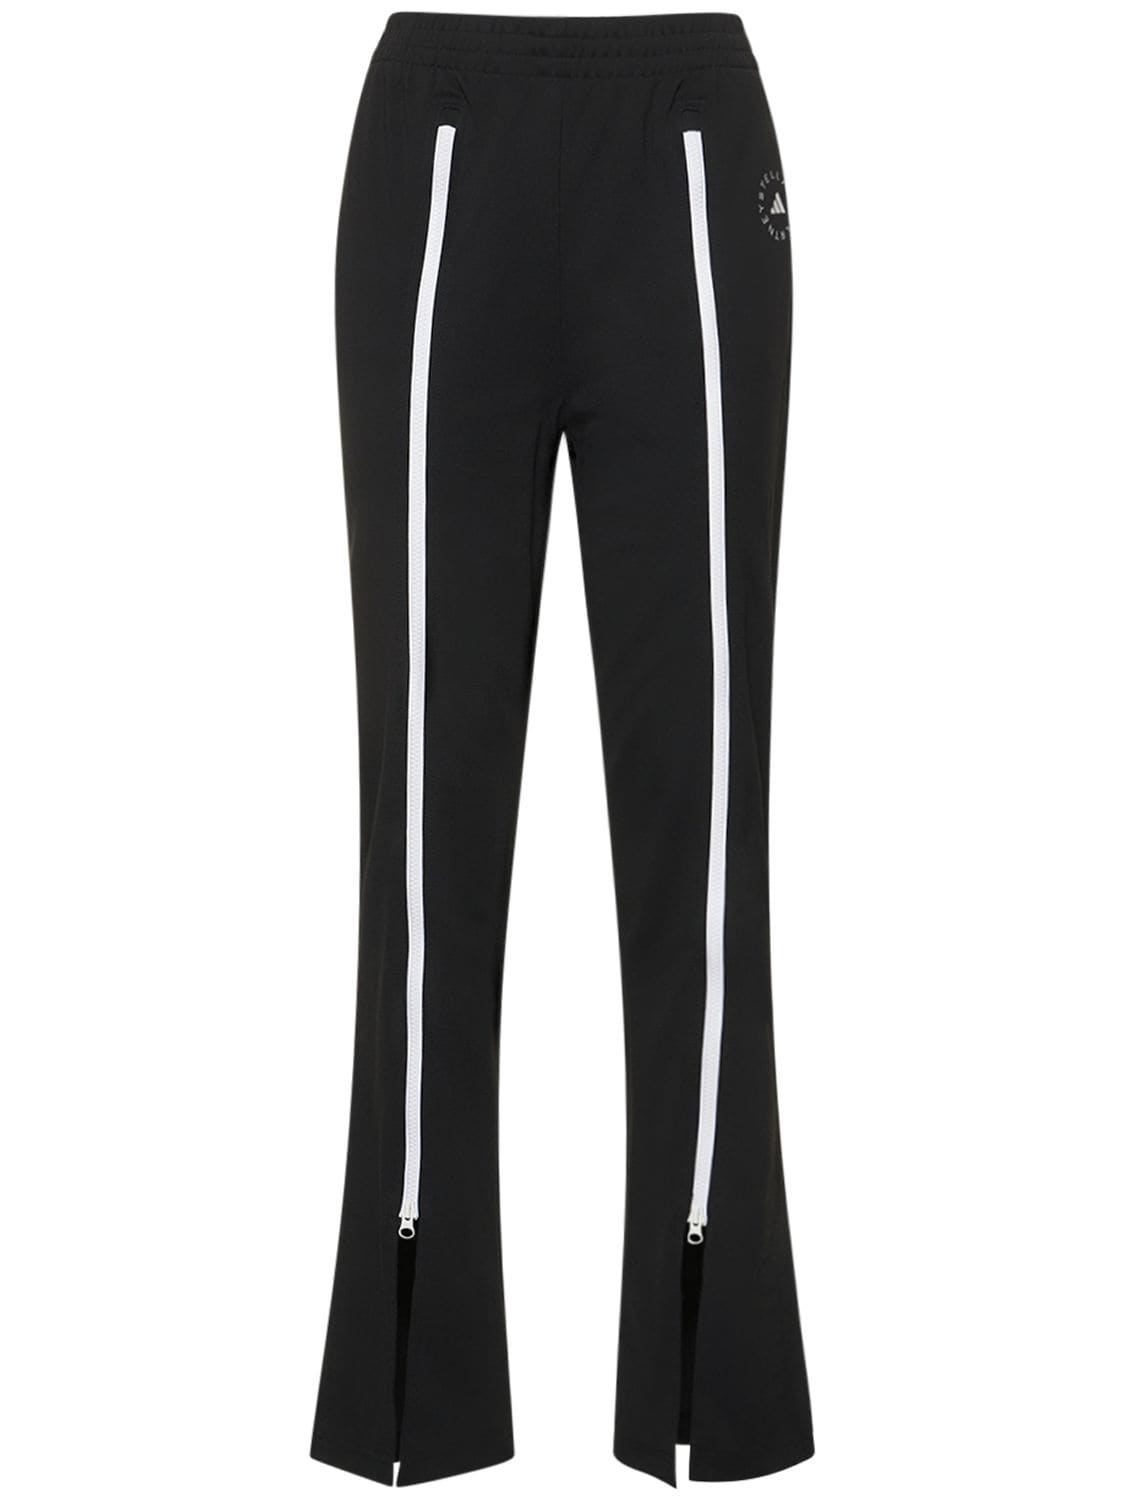 Adidas X Stella McCartney Asmc Truecasuals Sportswear Pants